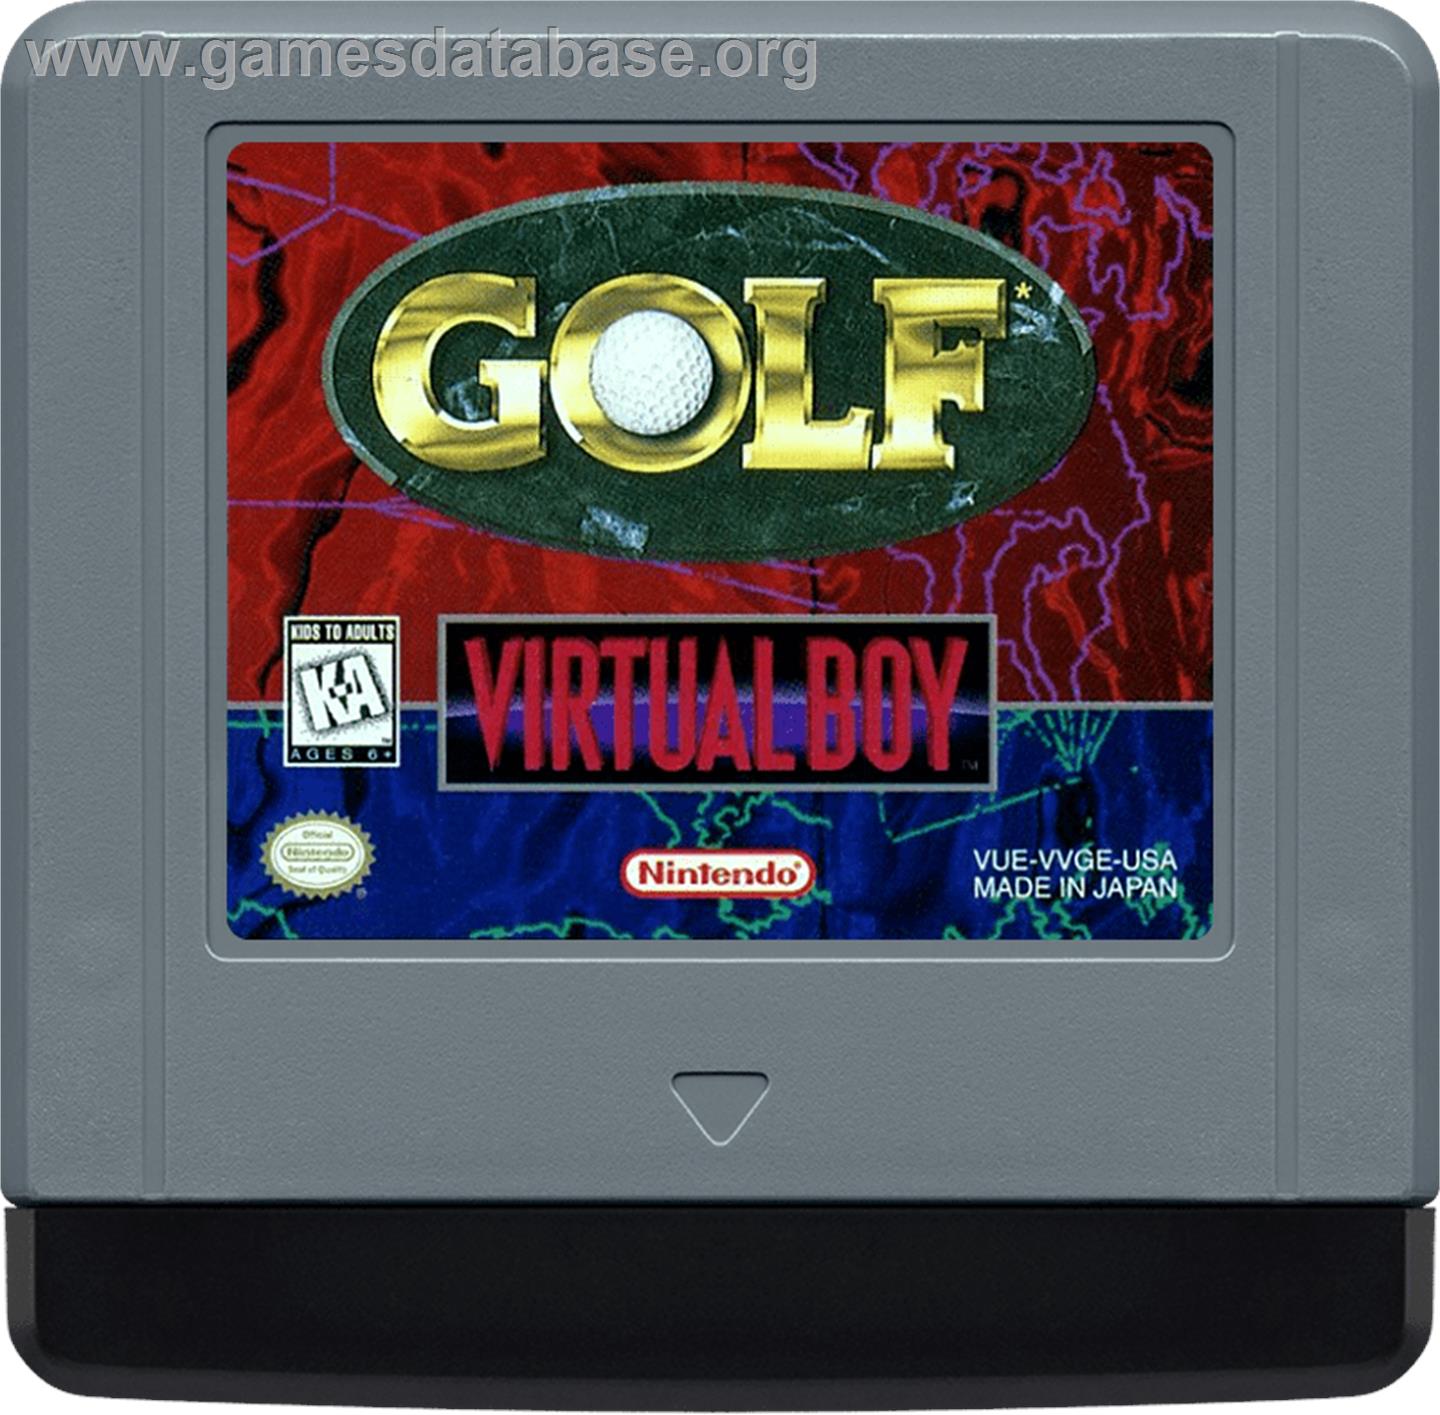 Golf - Nintendo Virtual Boy - Artwork - Cartridge